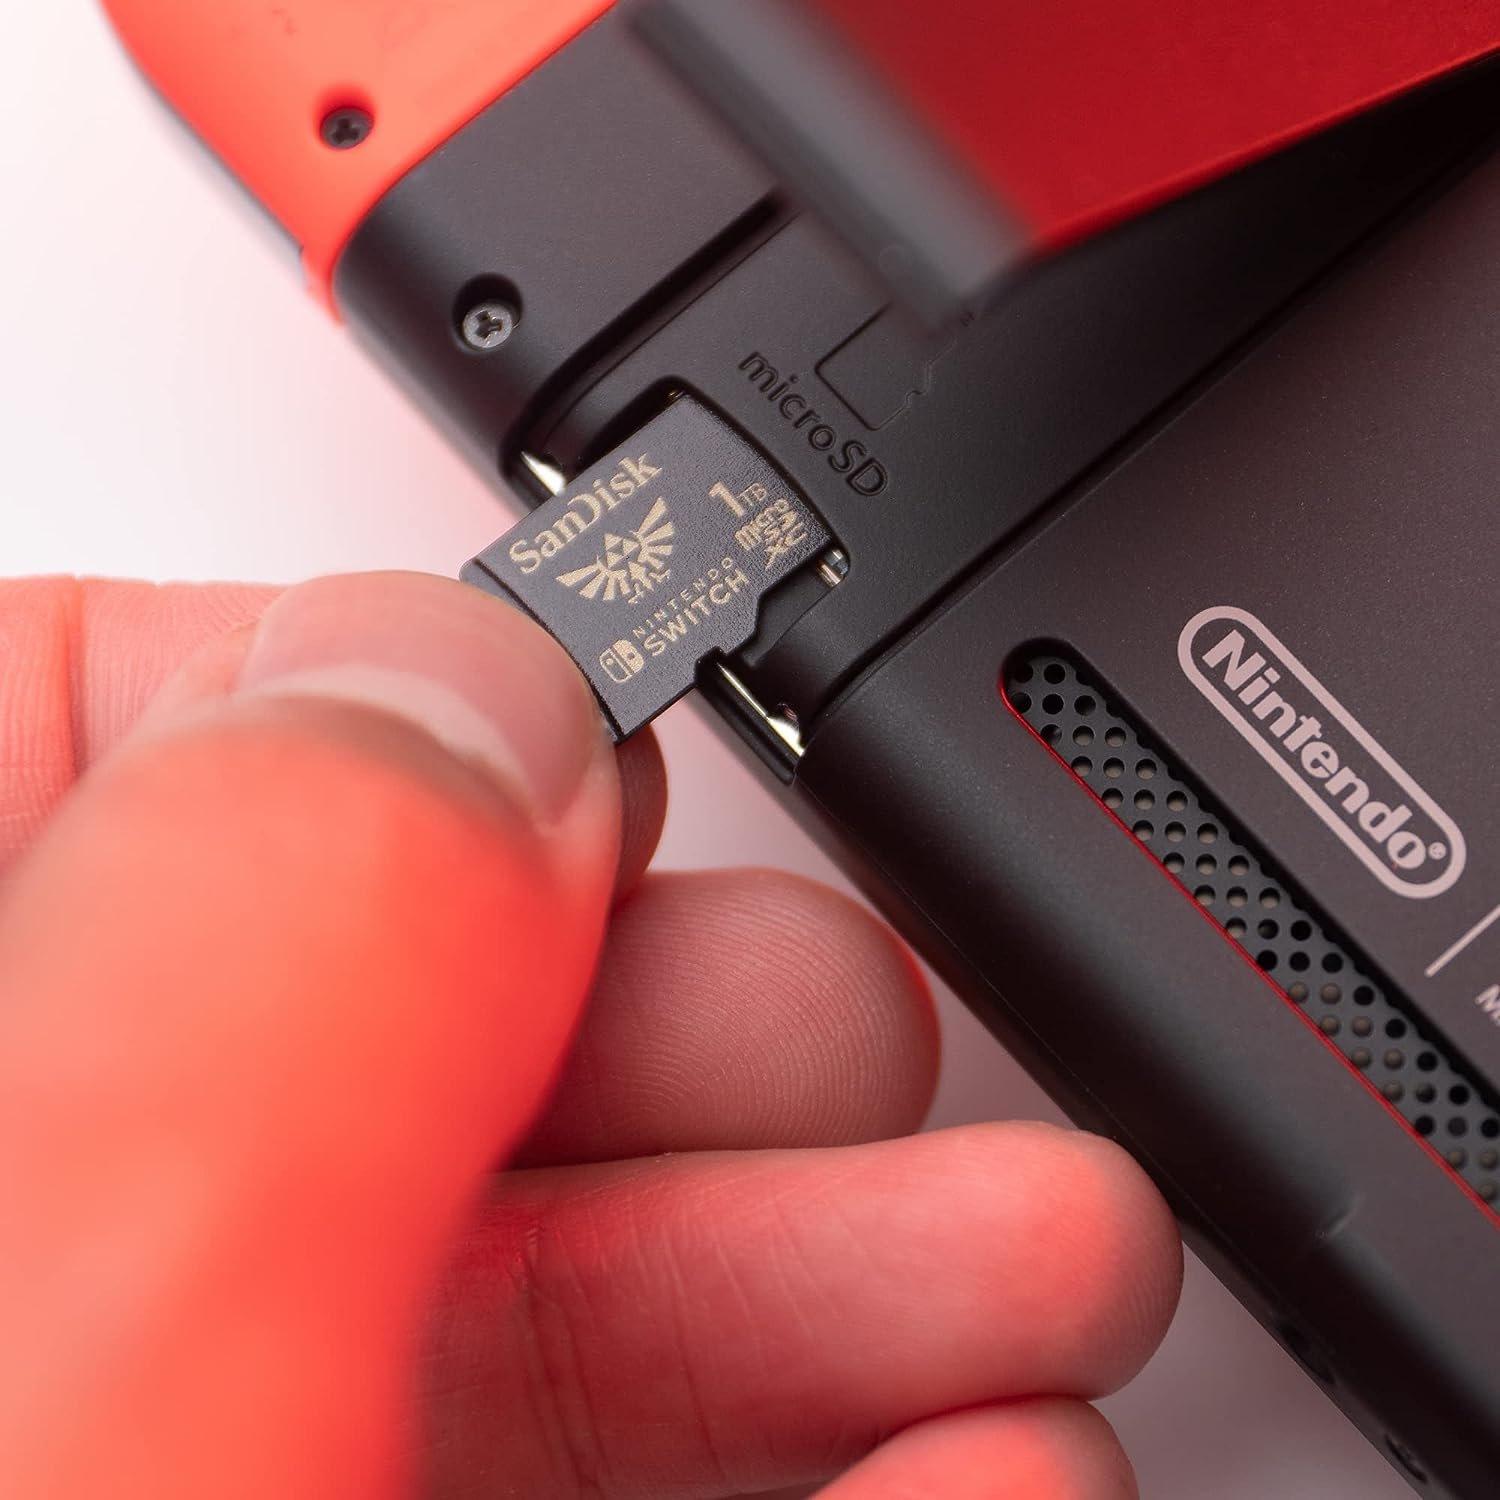 microSDXC™ Cards for Nintendo Switch